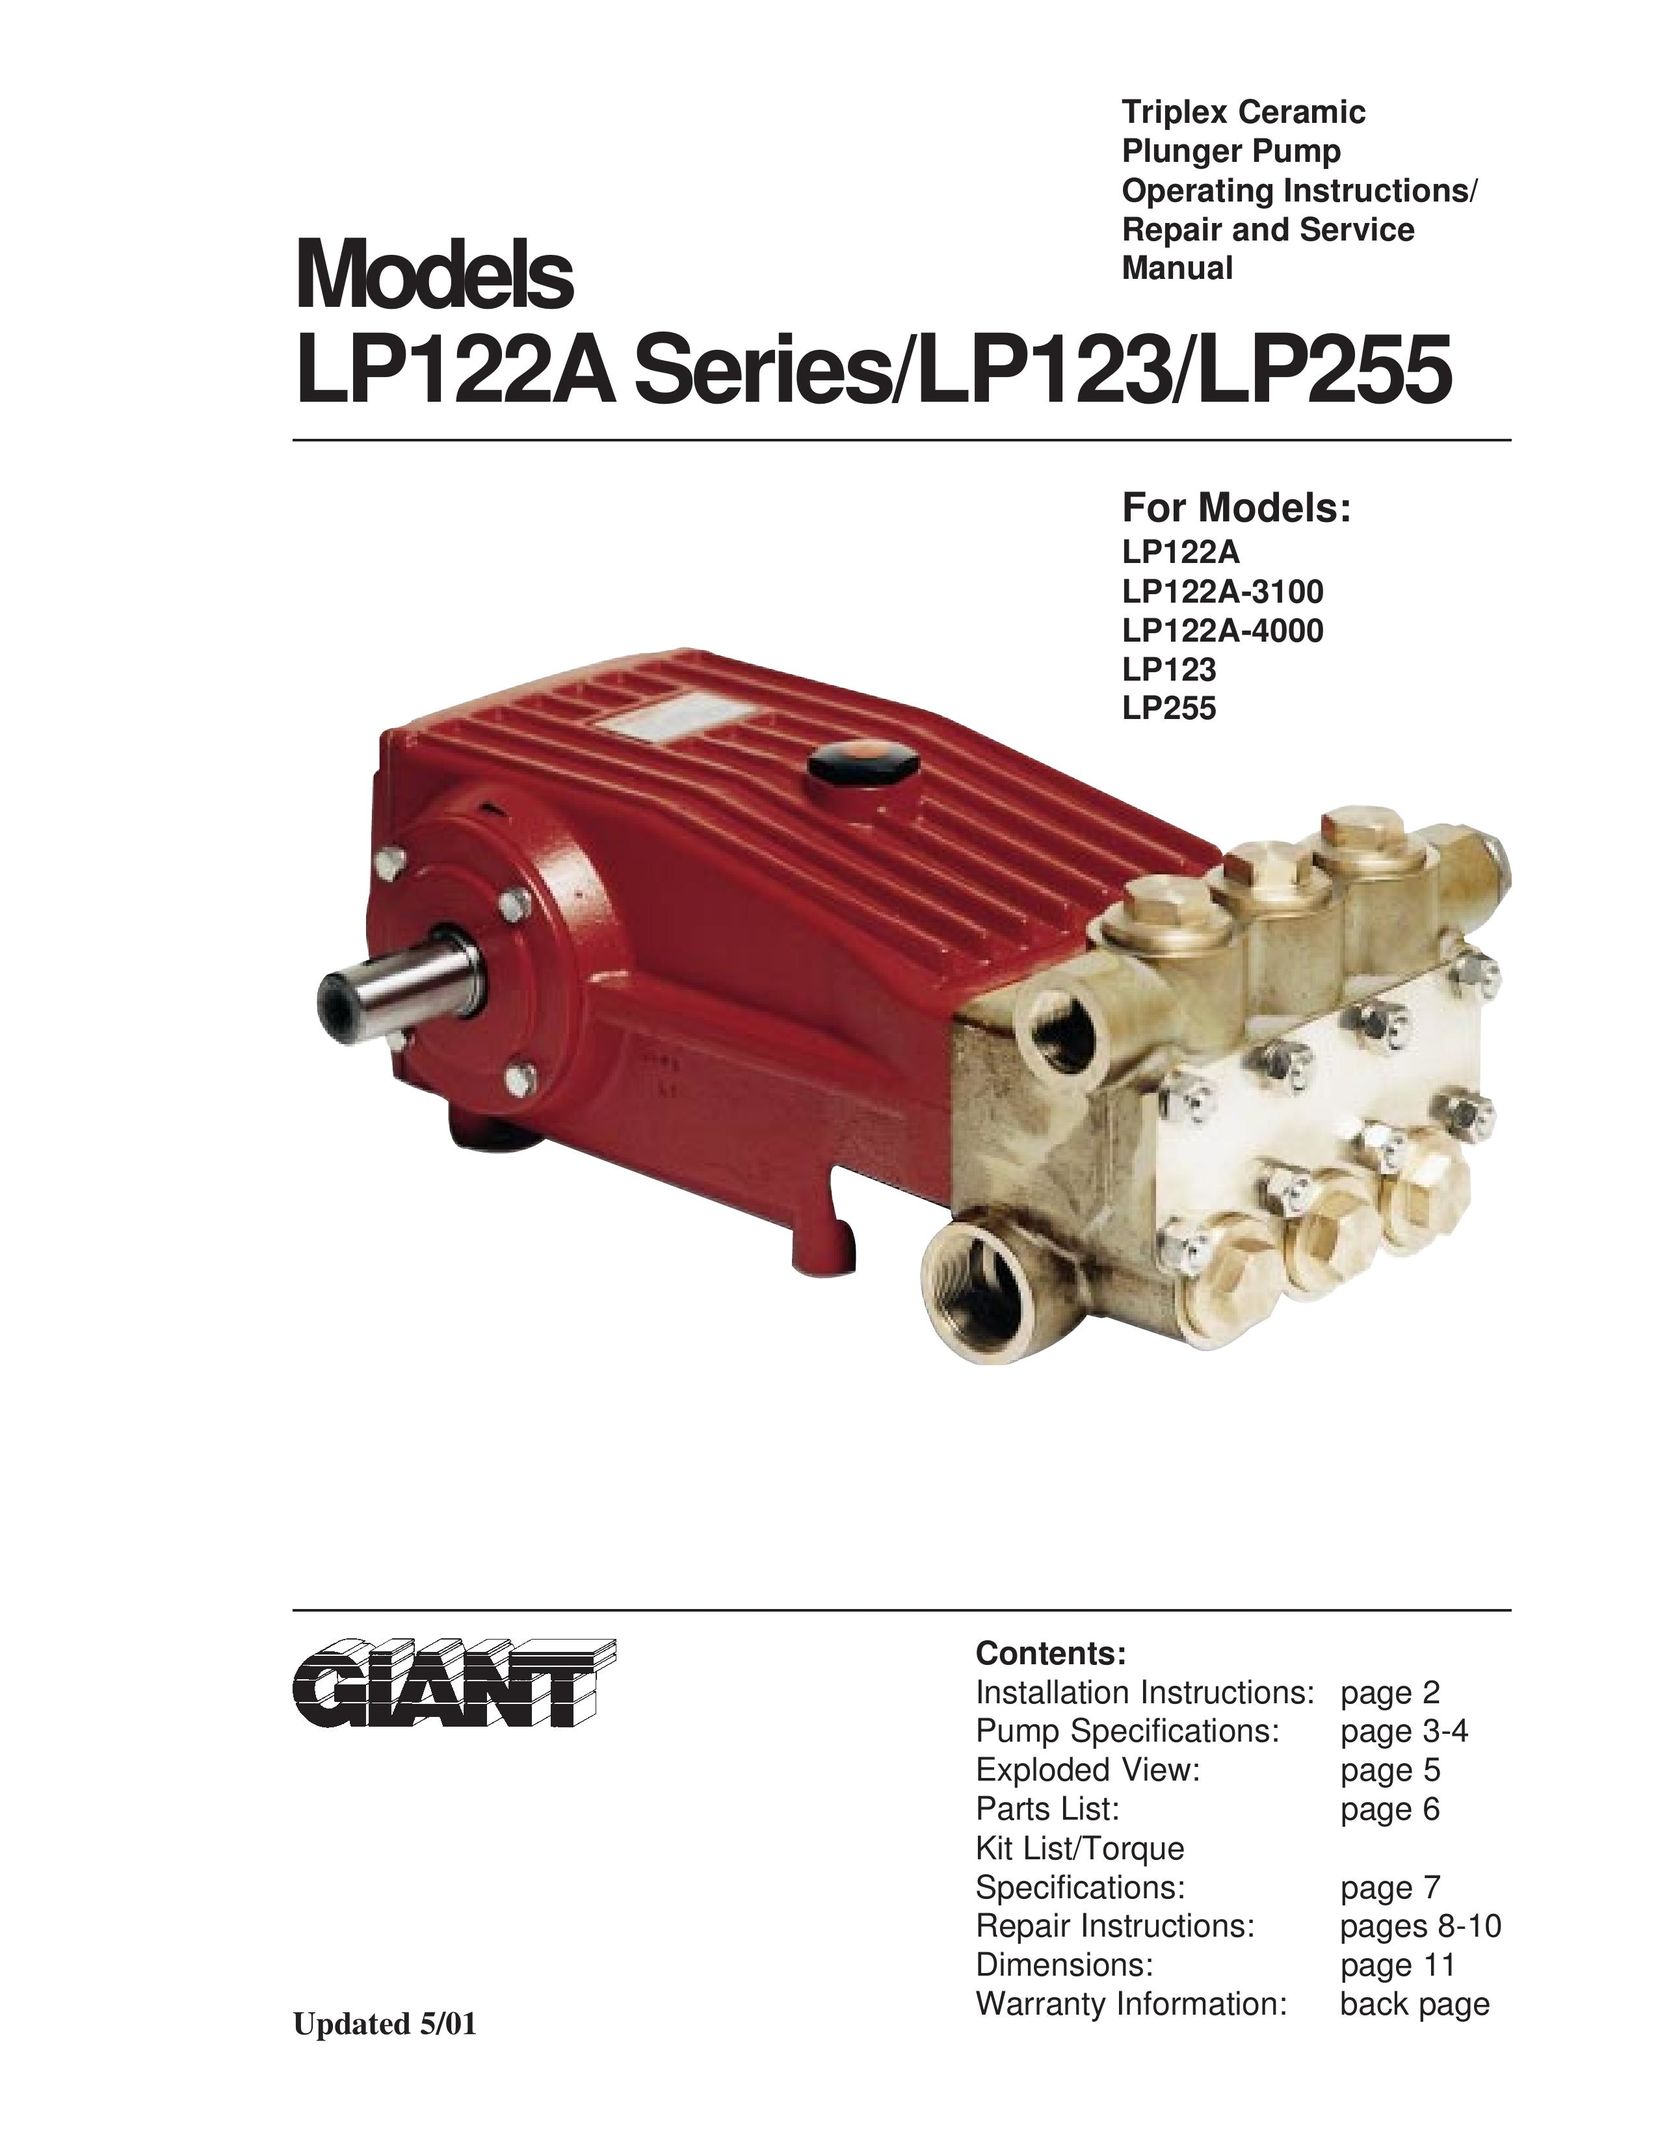 Giant LP122A-3100 Water Pump User Manual